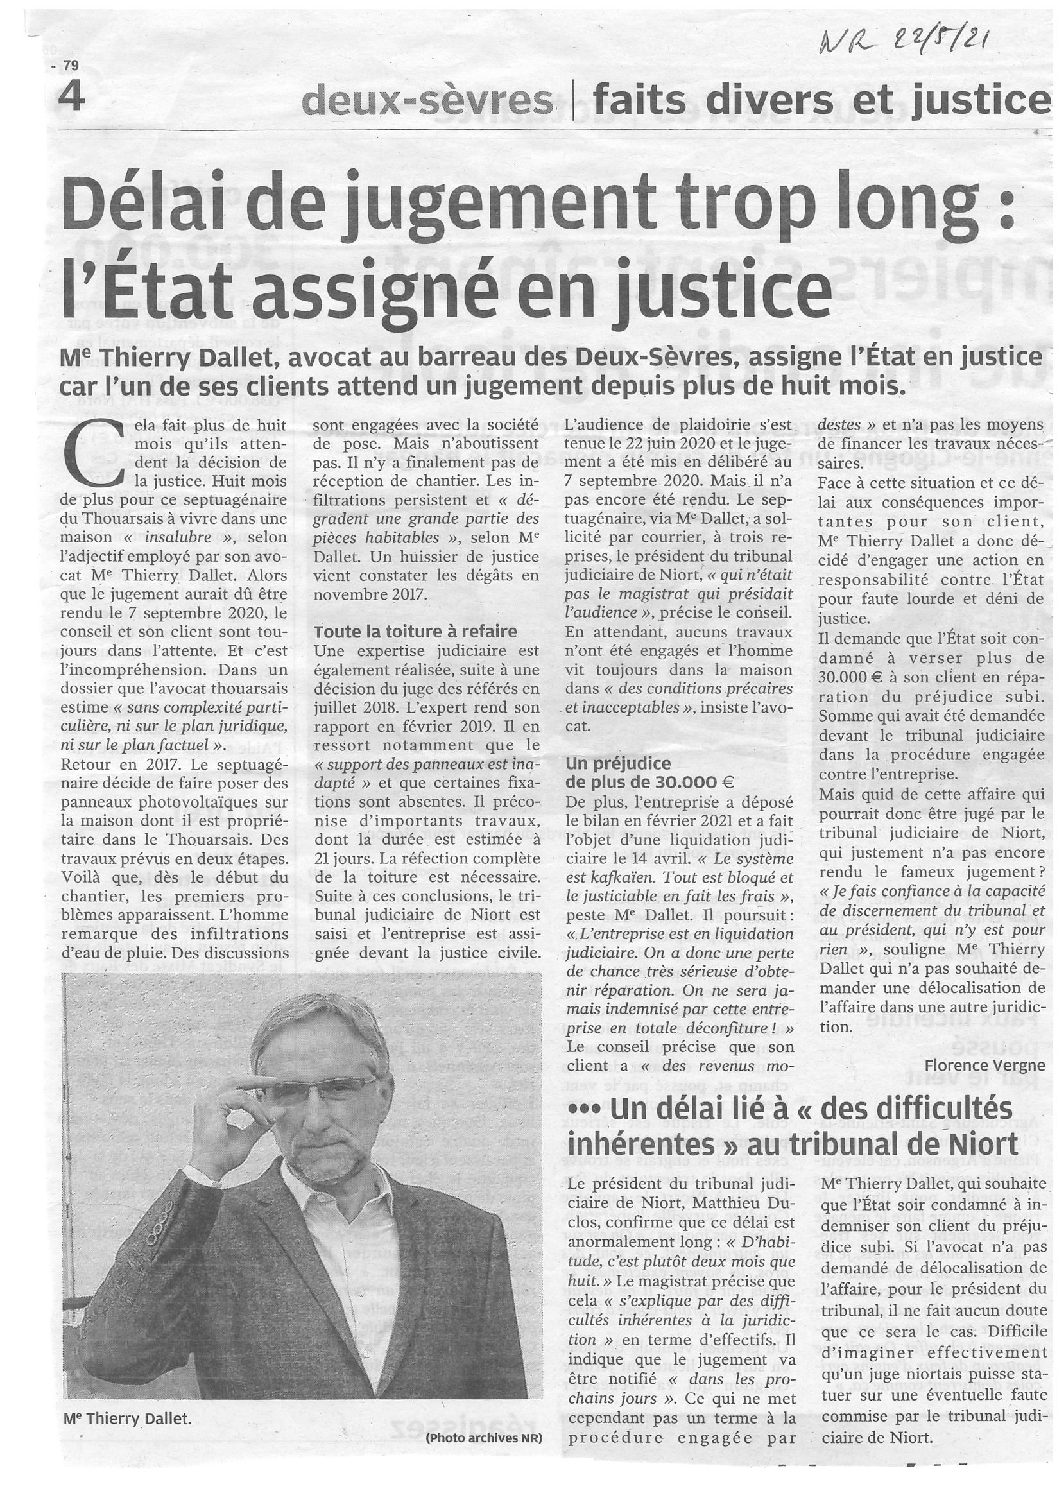 You are currently viewing Maître Dallet assigne l’état en justice